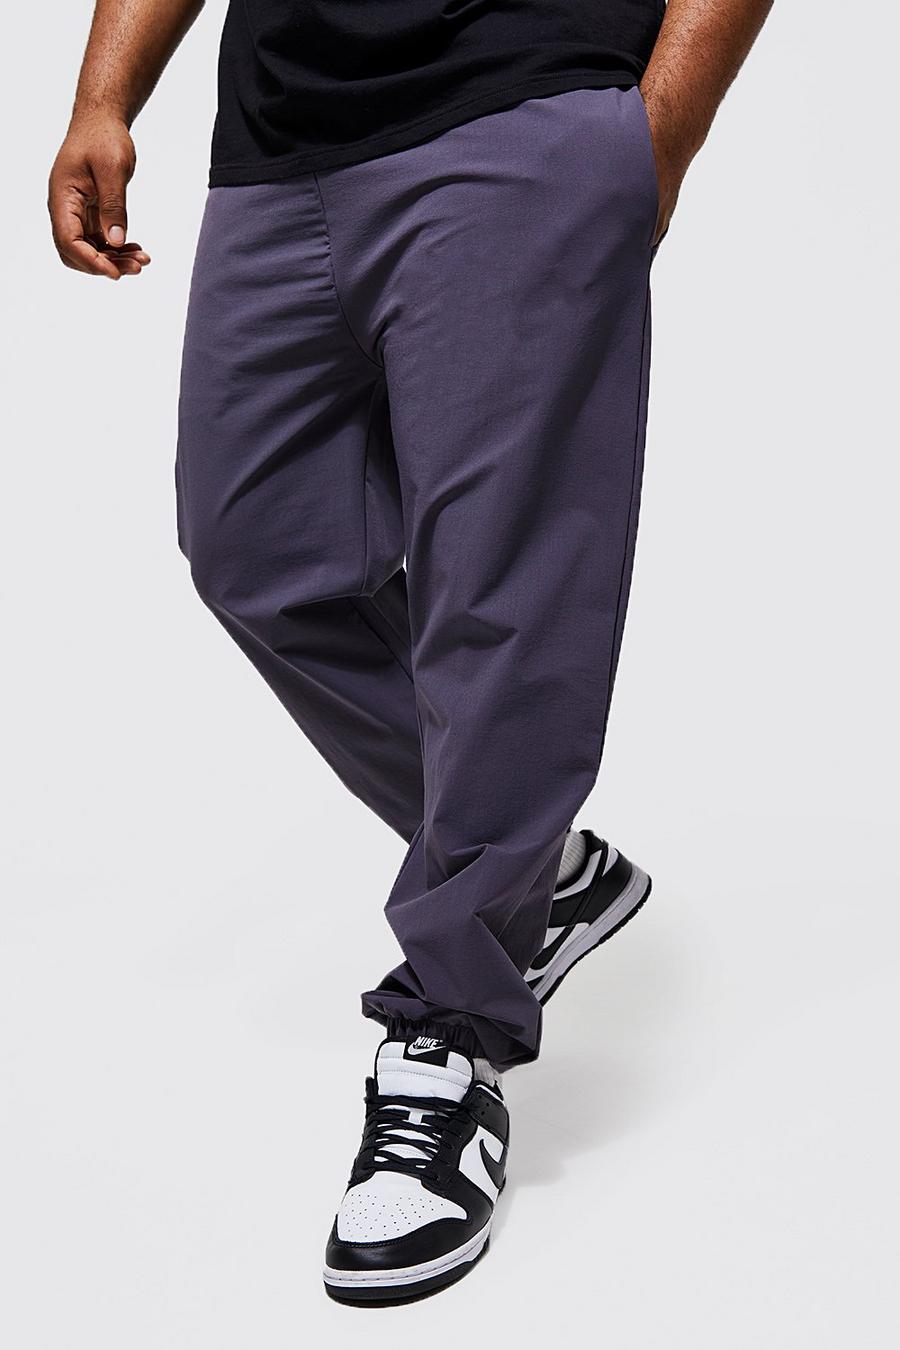 Pantalón Plus ajustado técnico con botamanga, Dark grey grigio